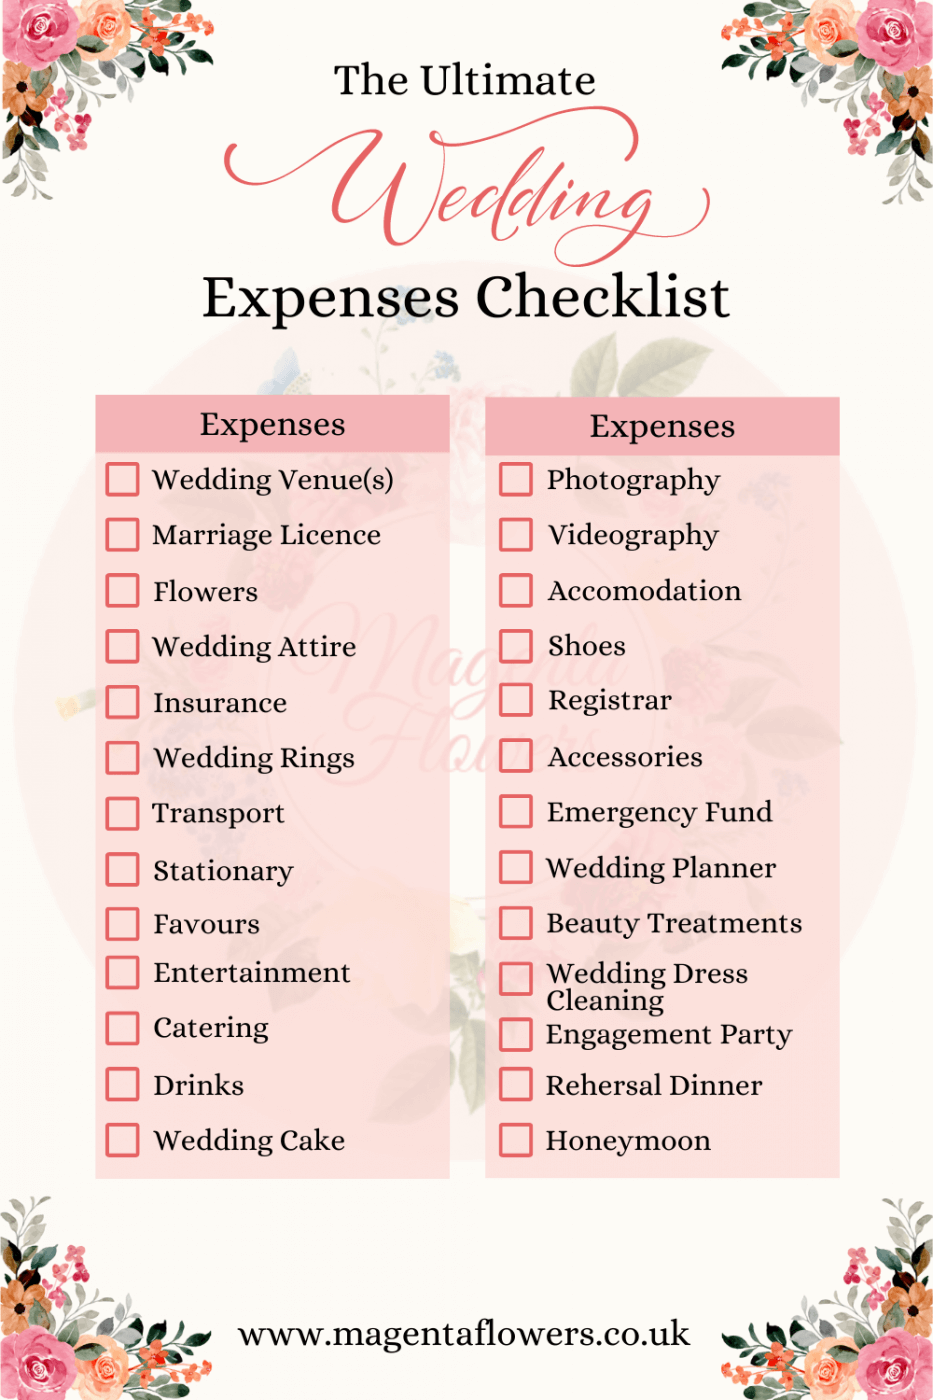 The Ultimate Wedding Budget Checklist